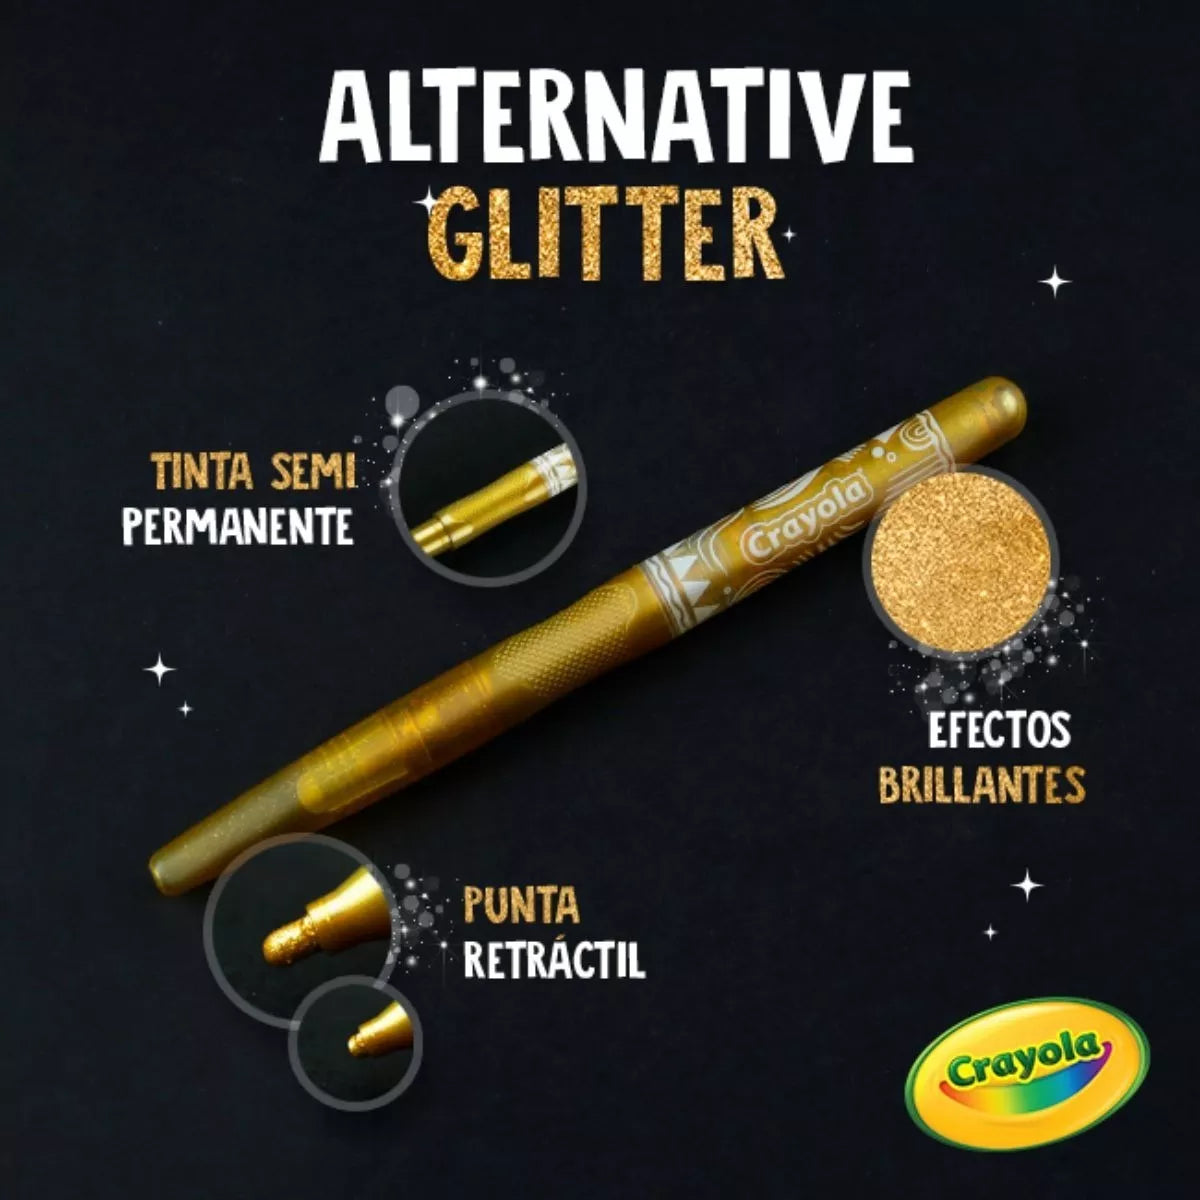 8 Plumones Glitter Alternative Markets No Tóxico Crayola